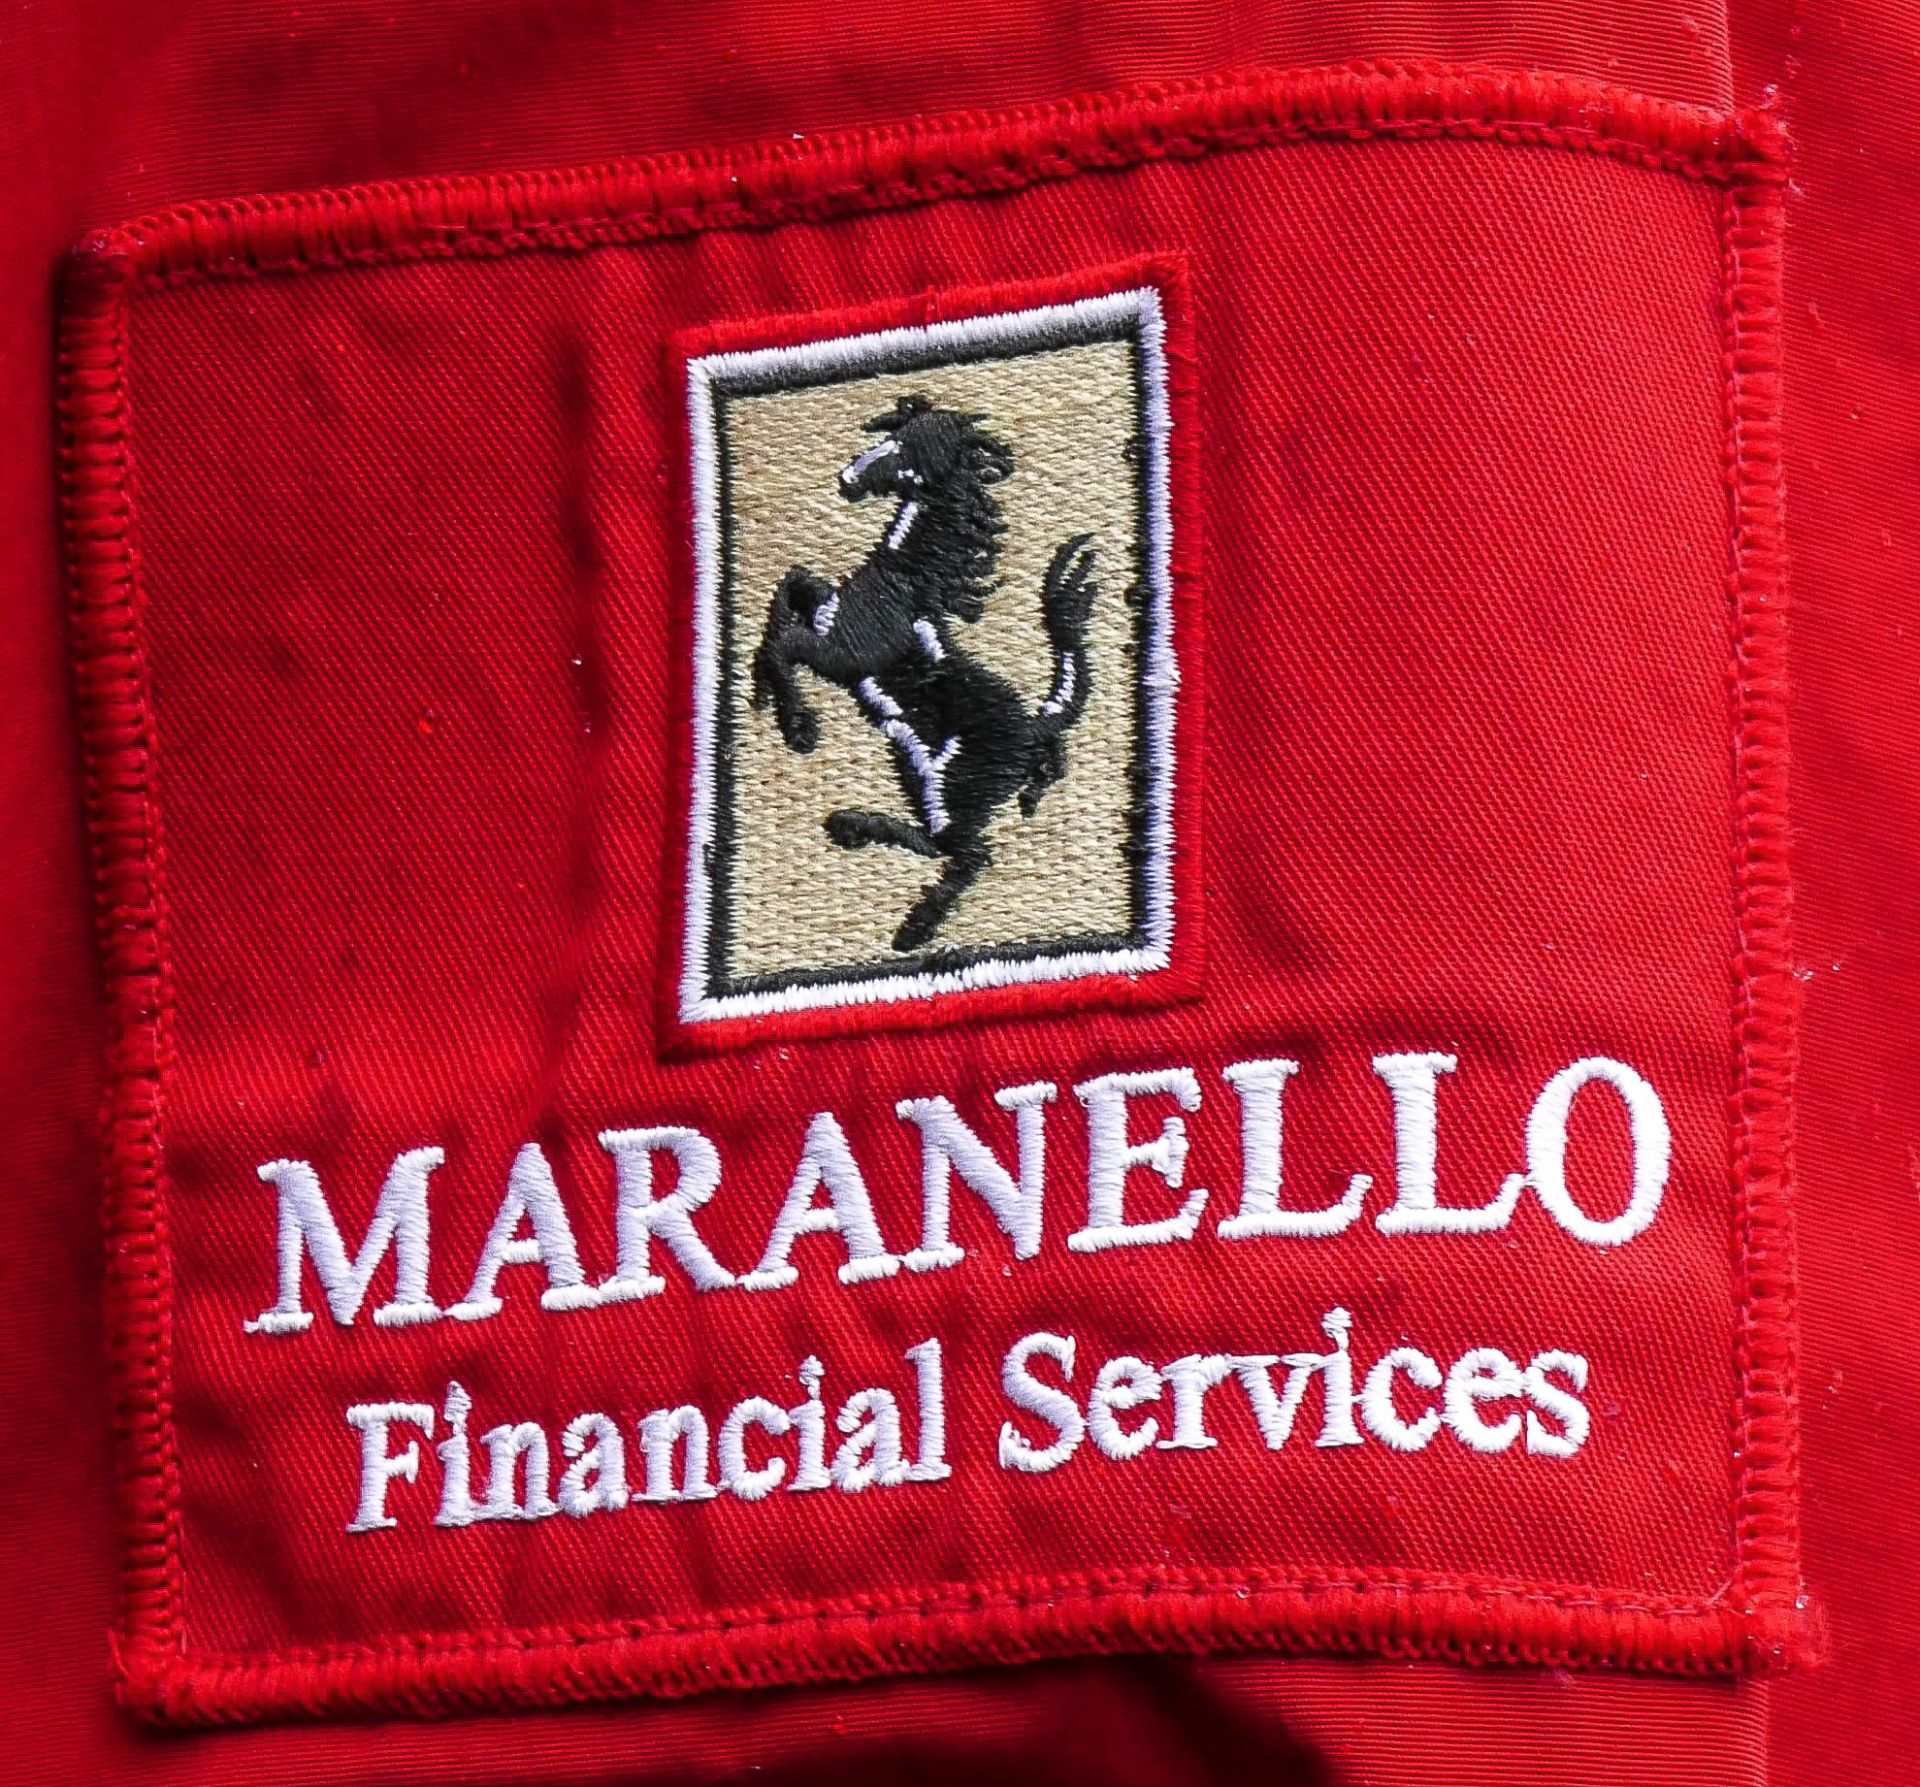 Ferrari Veloqx Motorsport/Team Maranello Concessionaires team jacket, size XL, as worn during the - Image 9 of 11